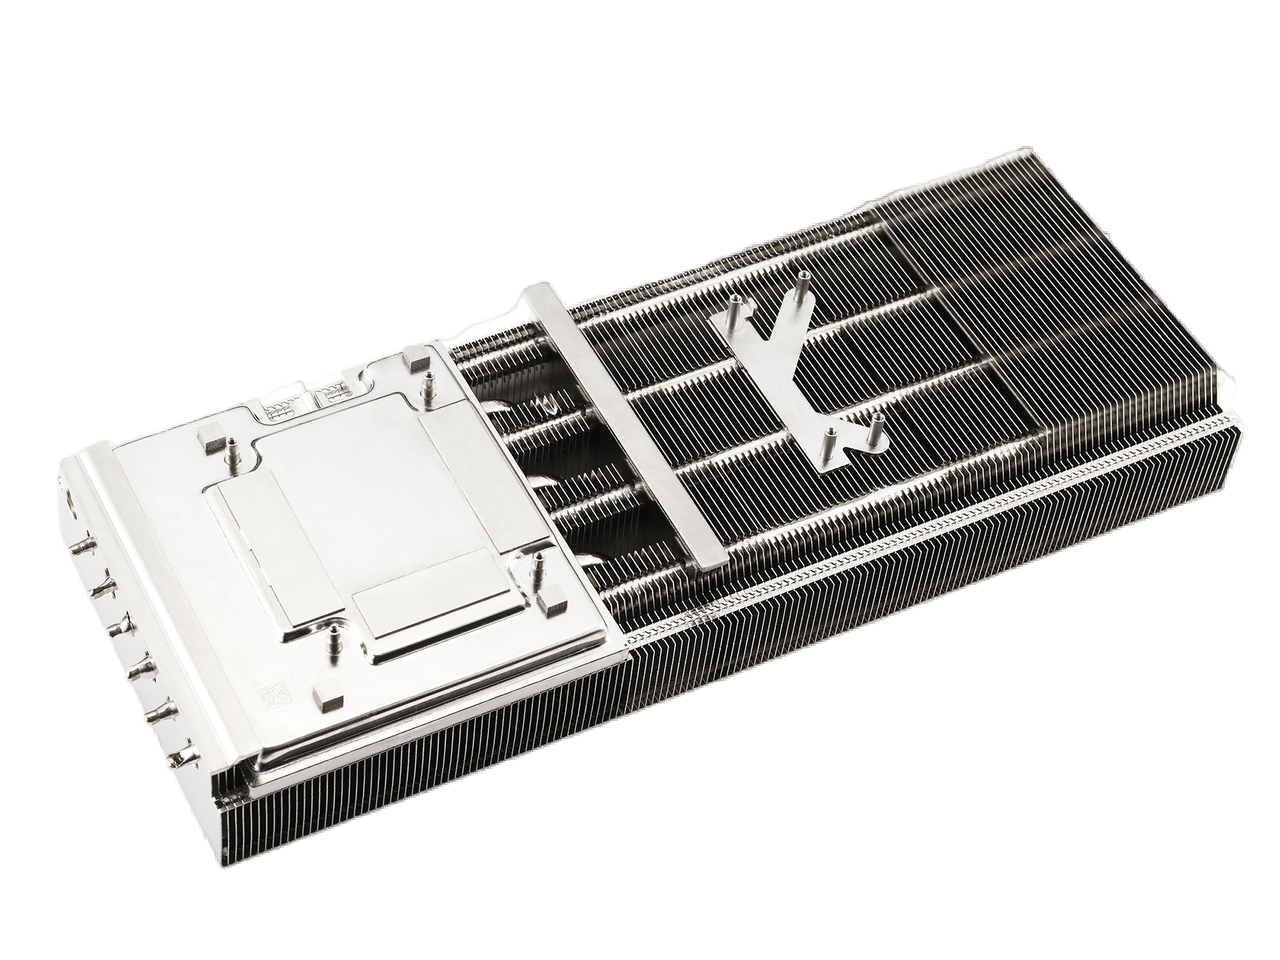 ASUS ROG GeForce RTX 4080 16GB GDDR6X PCI Express 4.0 Video Card ROG-STRIX-RTX4080-O16G-GAMING